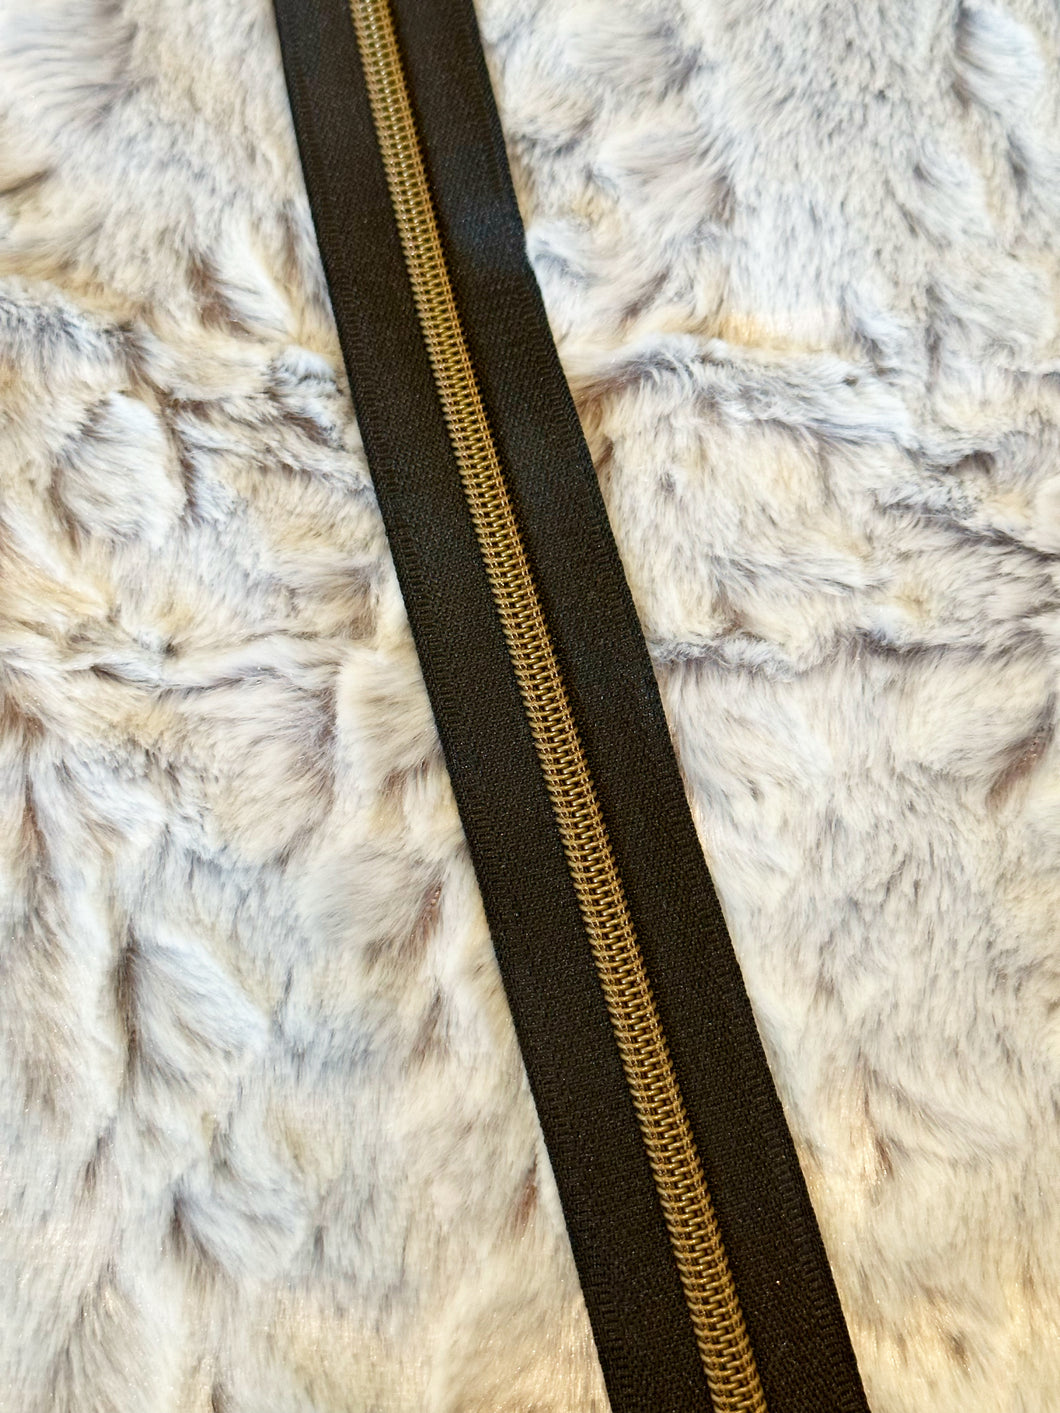 Bronze Zipper Tape (non metallic)